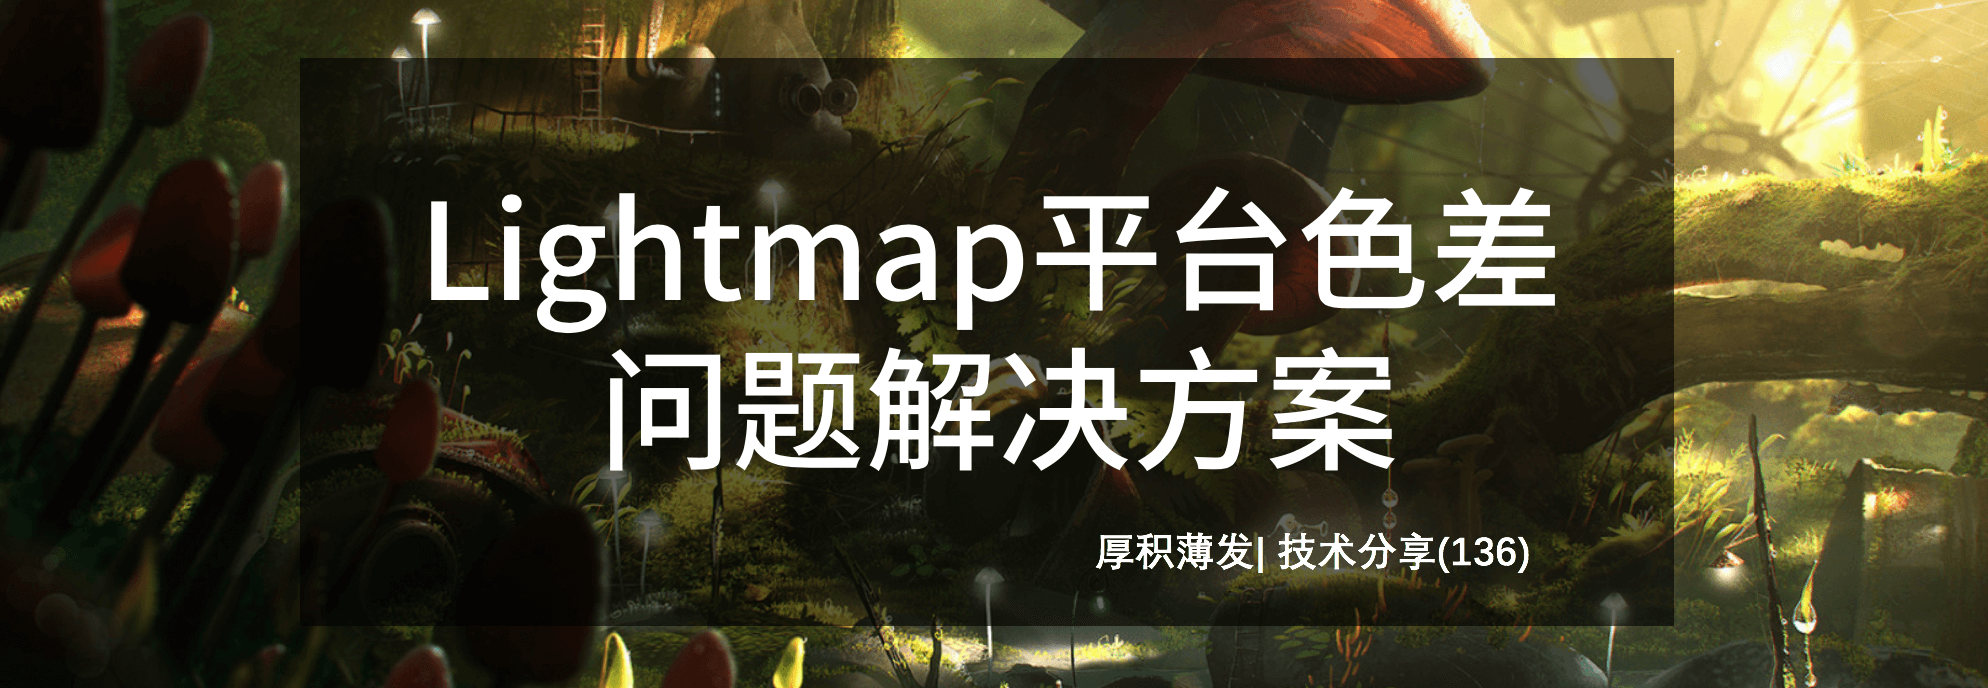 Lightmap平台色差问题解决方案